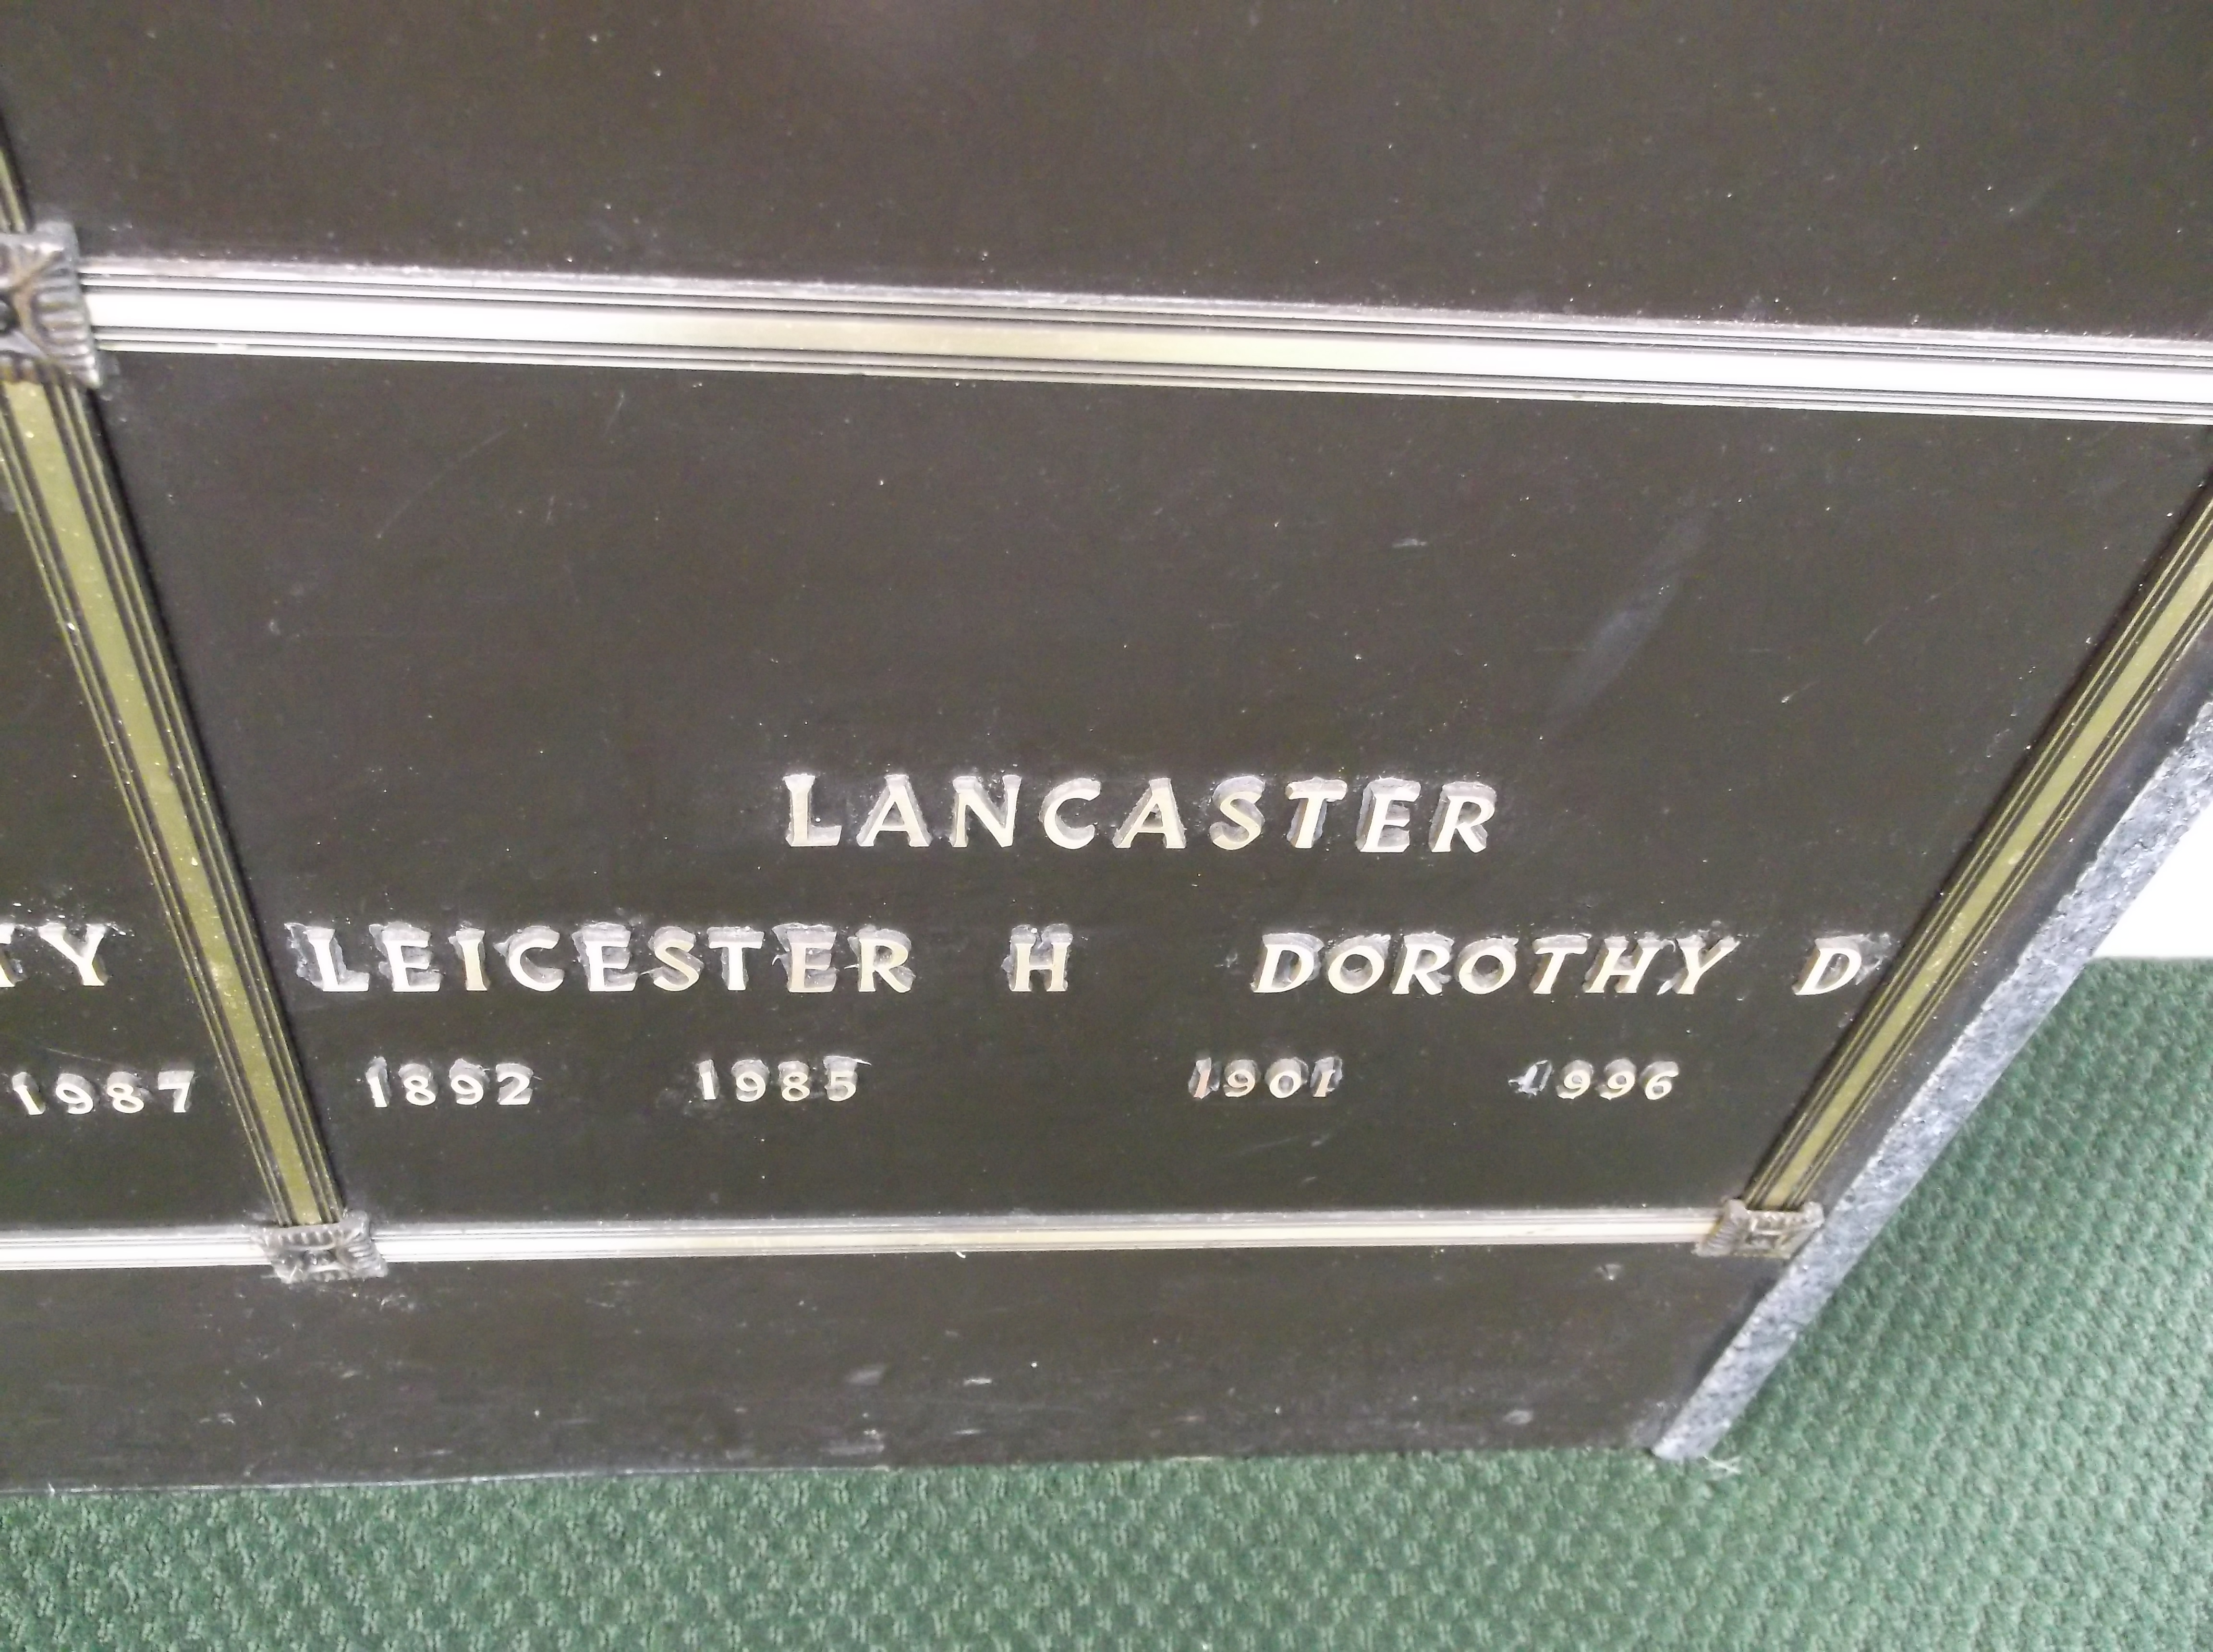 Dorothy D Lancaster